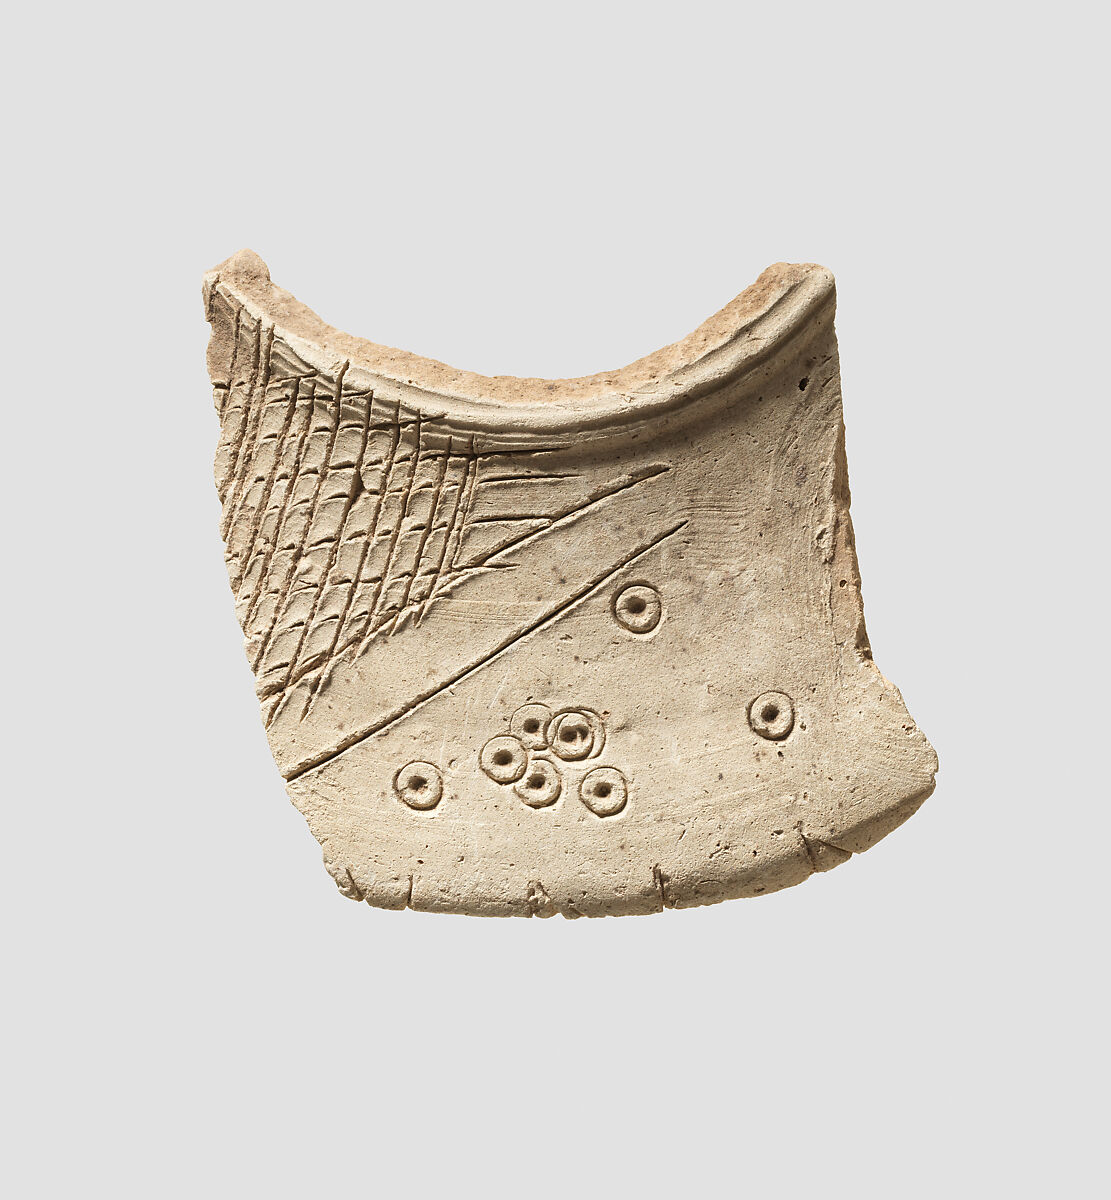 Sherd, Ceramic, Sasanian or Islamic 